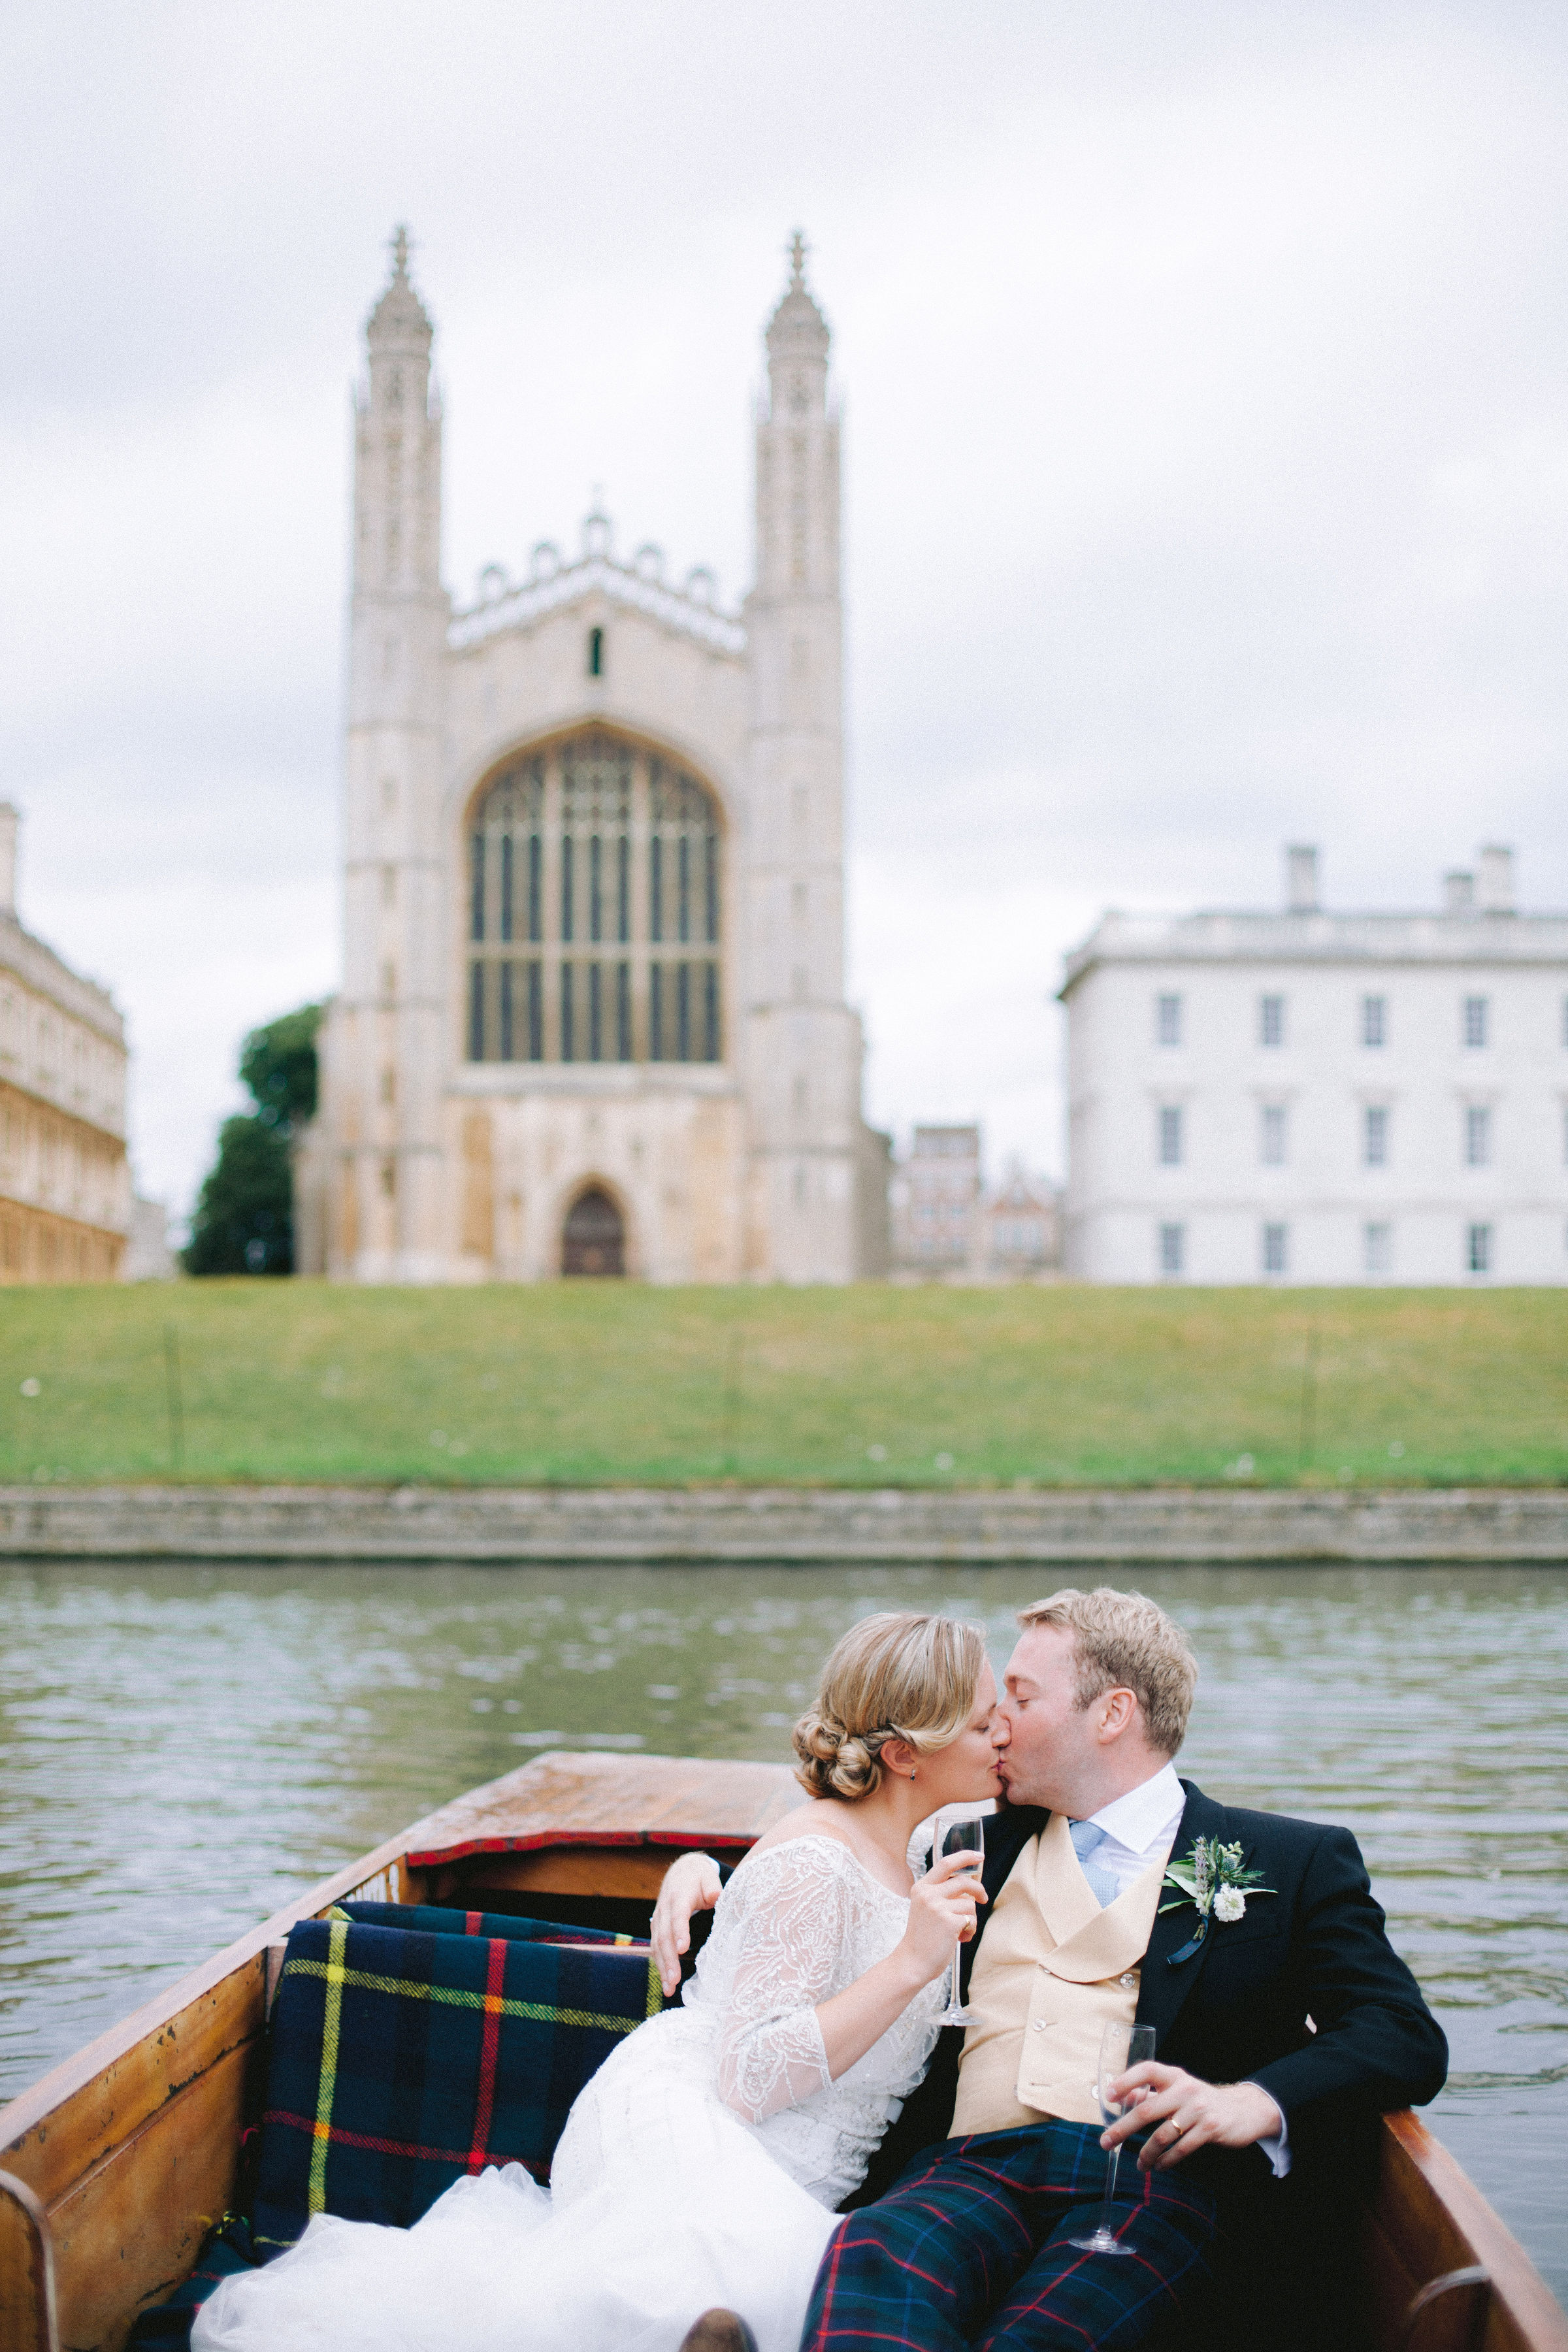  Romantic couple portrait in Cambridge